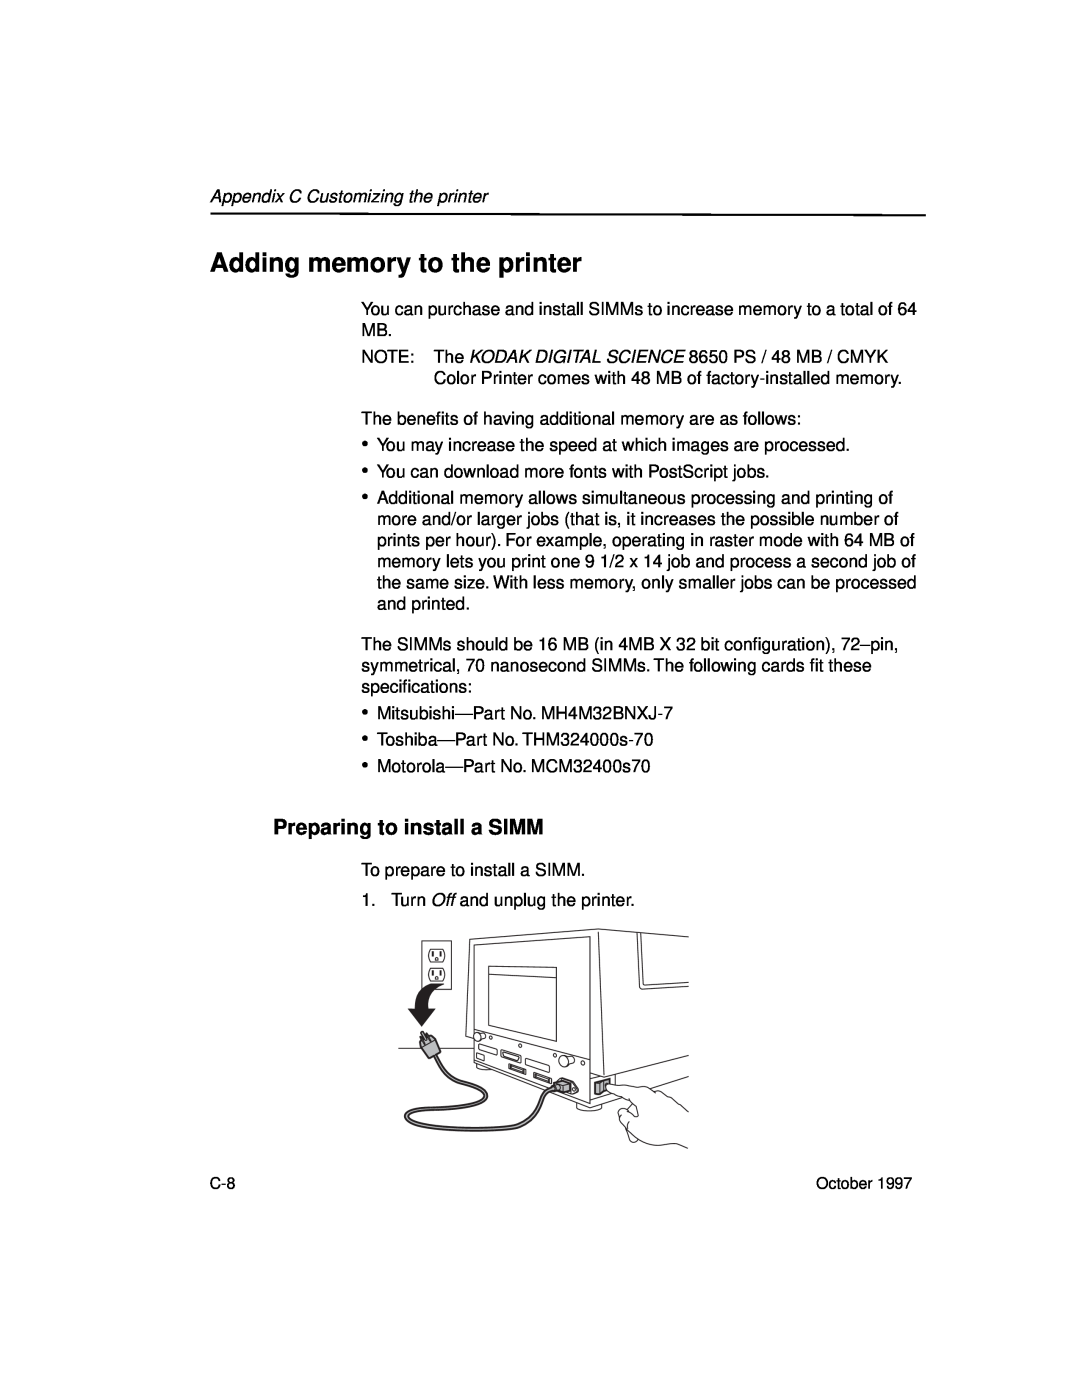 Kodak 8650 manual Adding memory to the printer, Preparing to install a SIMM, Appendix C Customizing the printer 